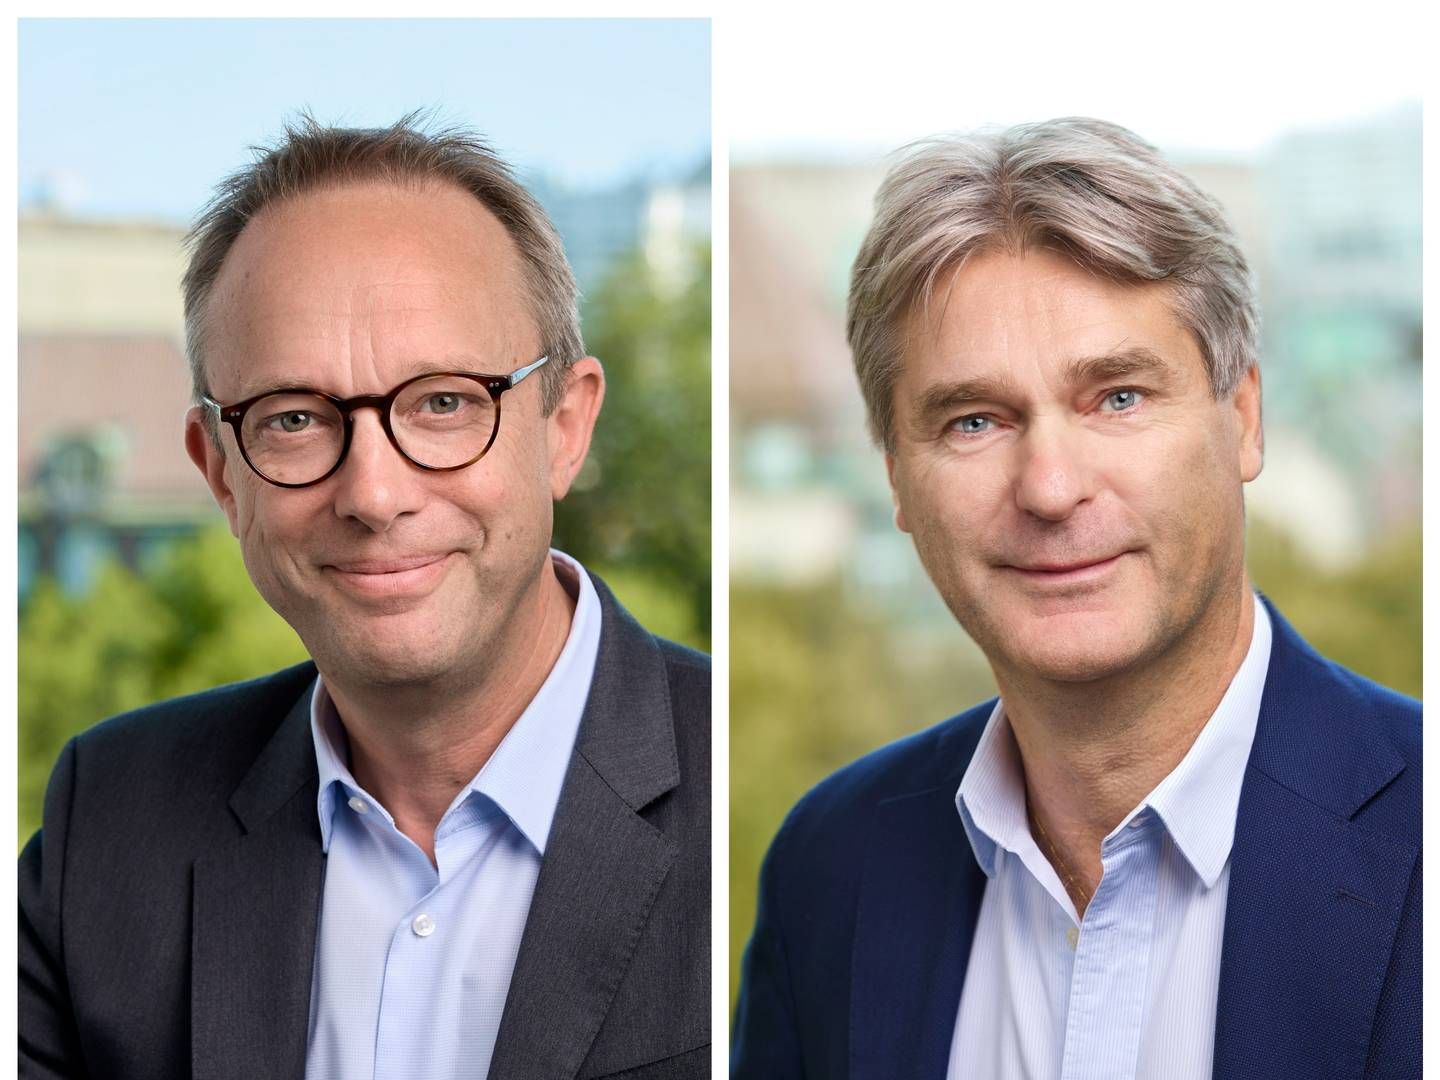 Pål Bergström (left) replaced Richard Gröttheim (right) as CEO of Sweden's default pension fund, AP7, on June 1 this year. | Photo: AP7/PR